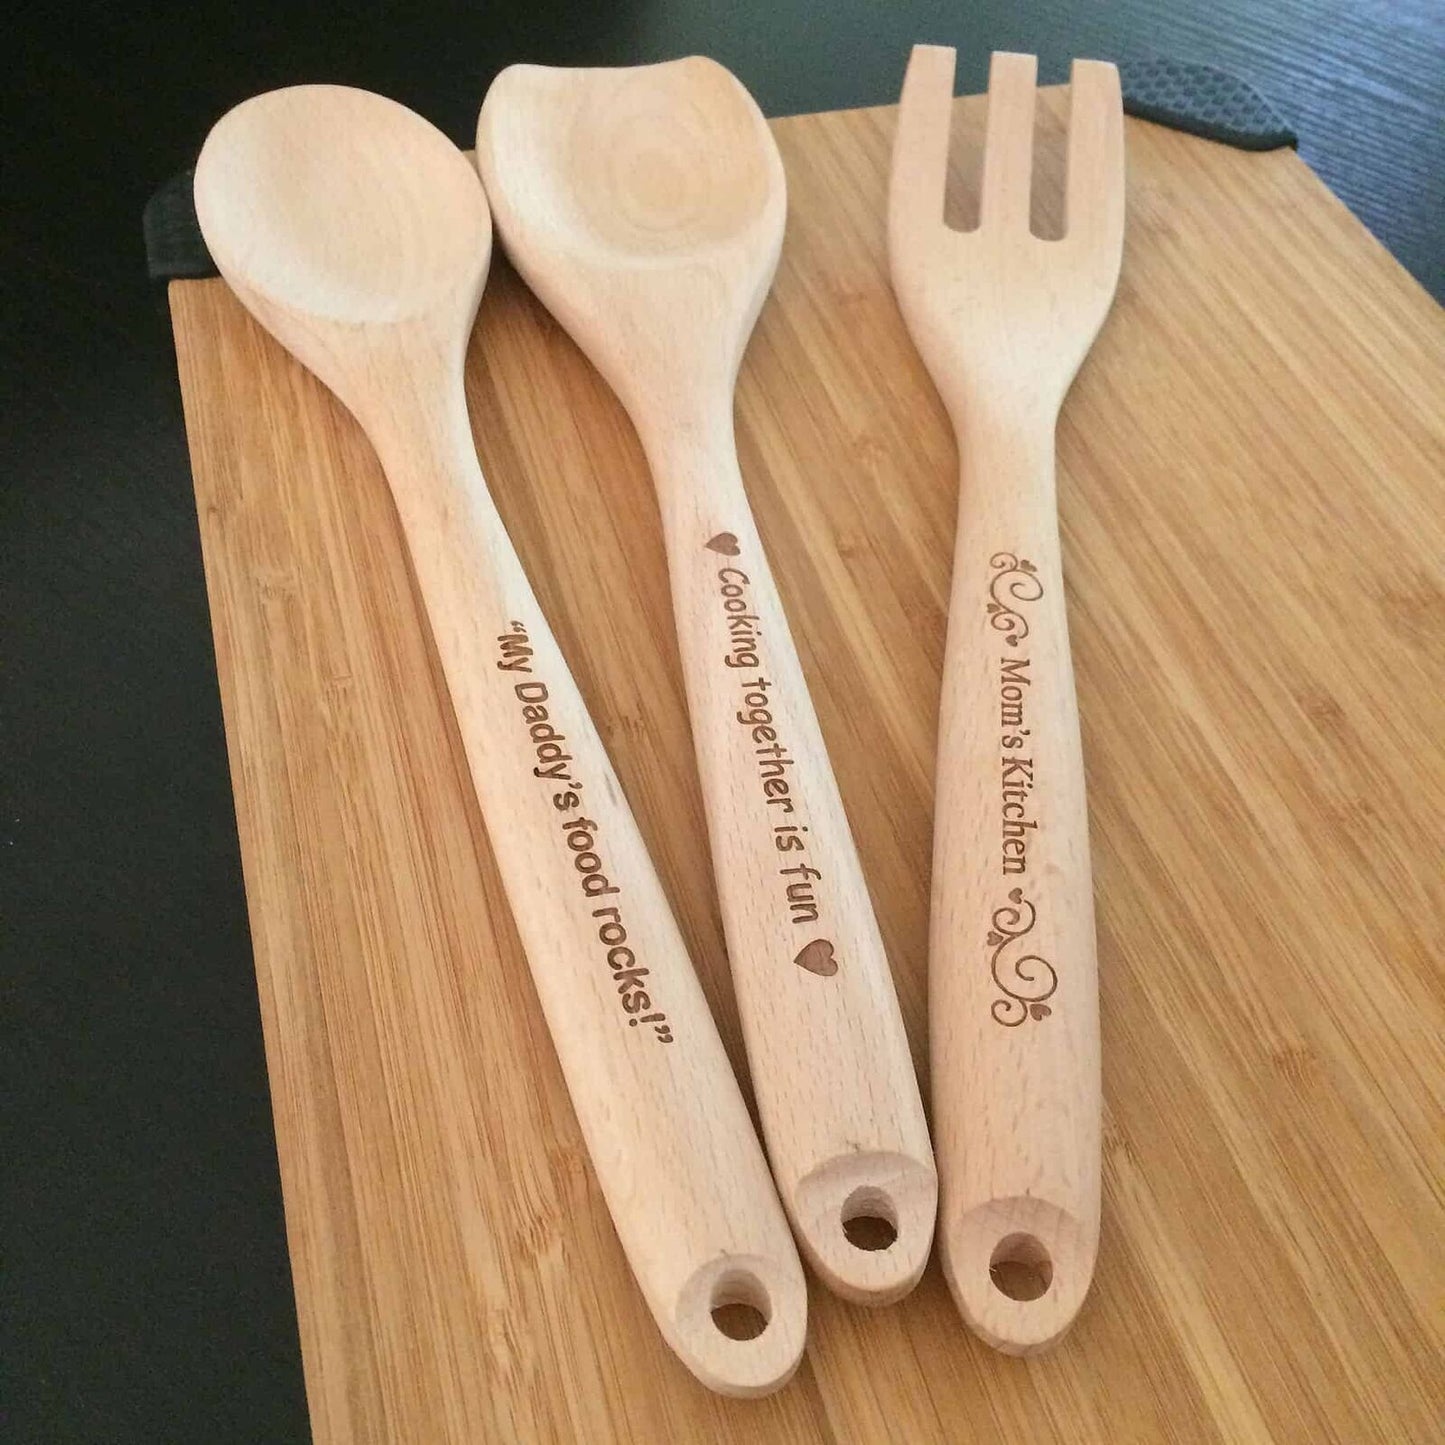 3 Pcs Wooden Kitchen Spoon set